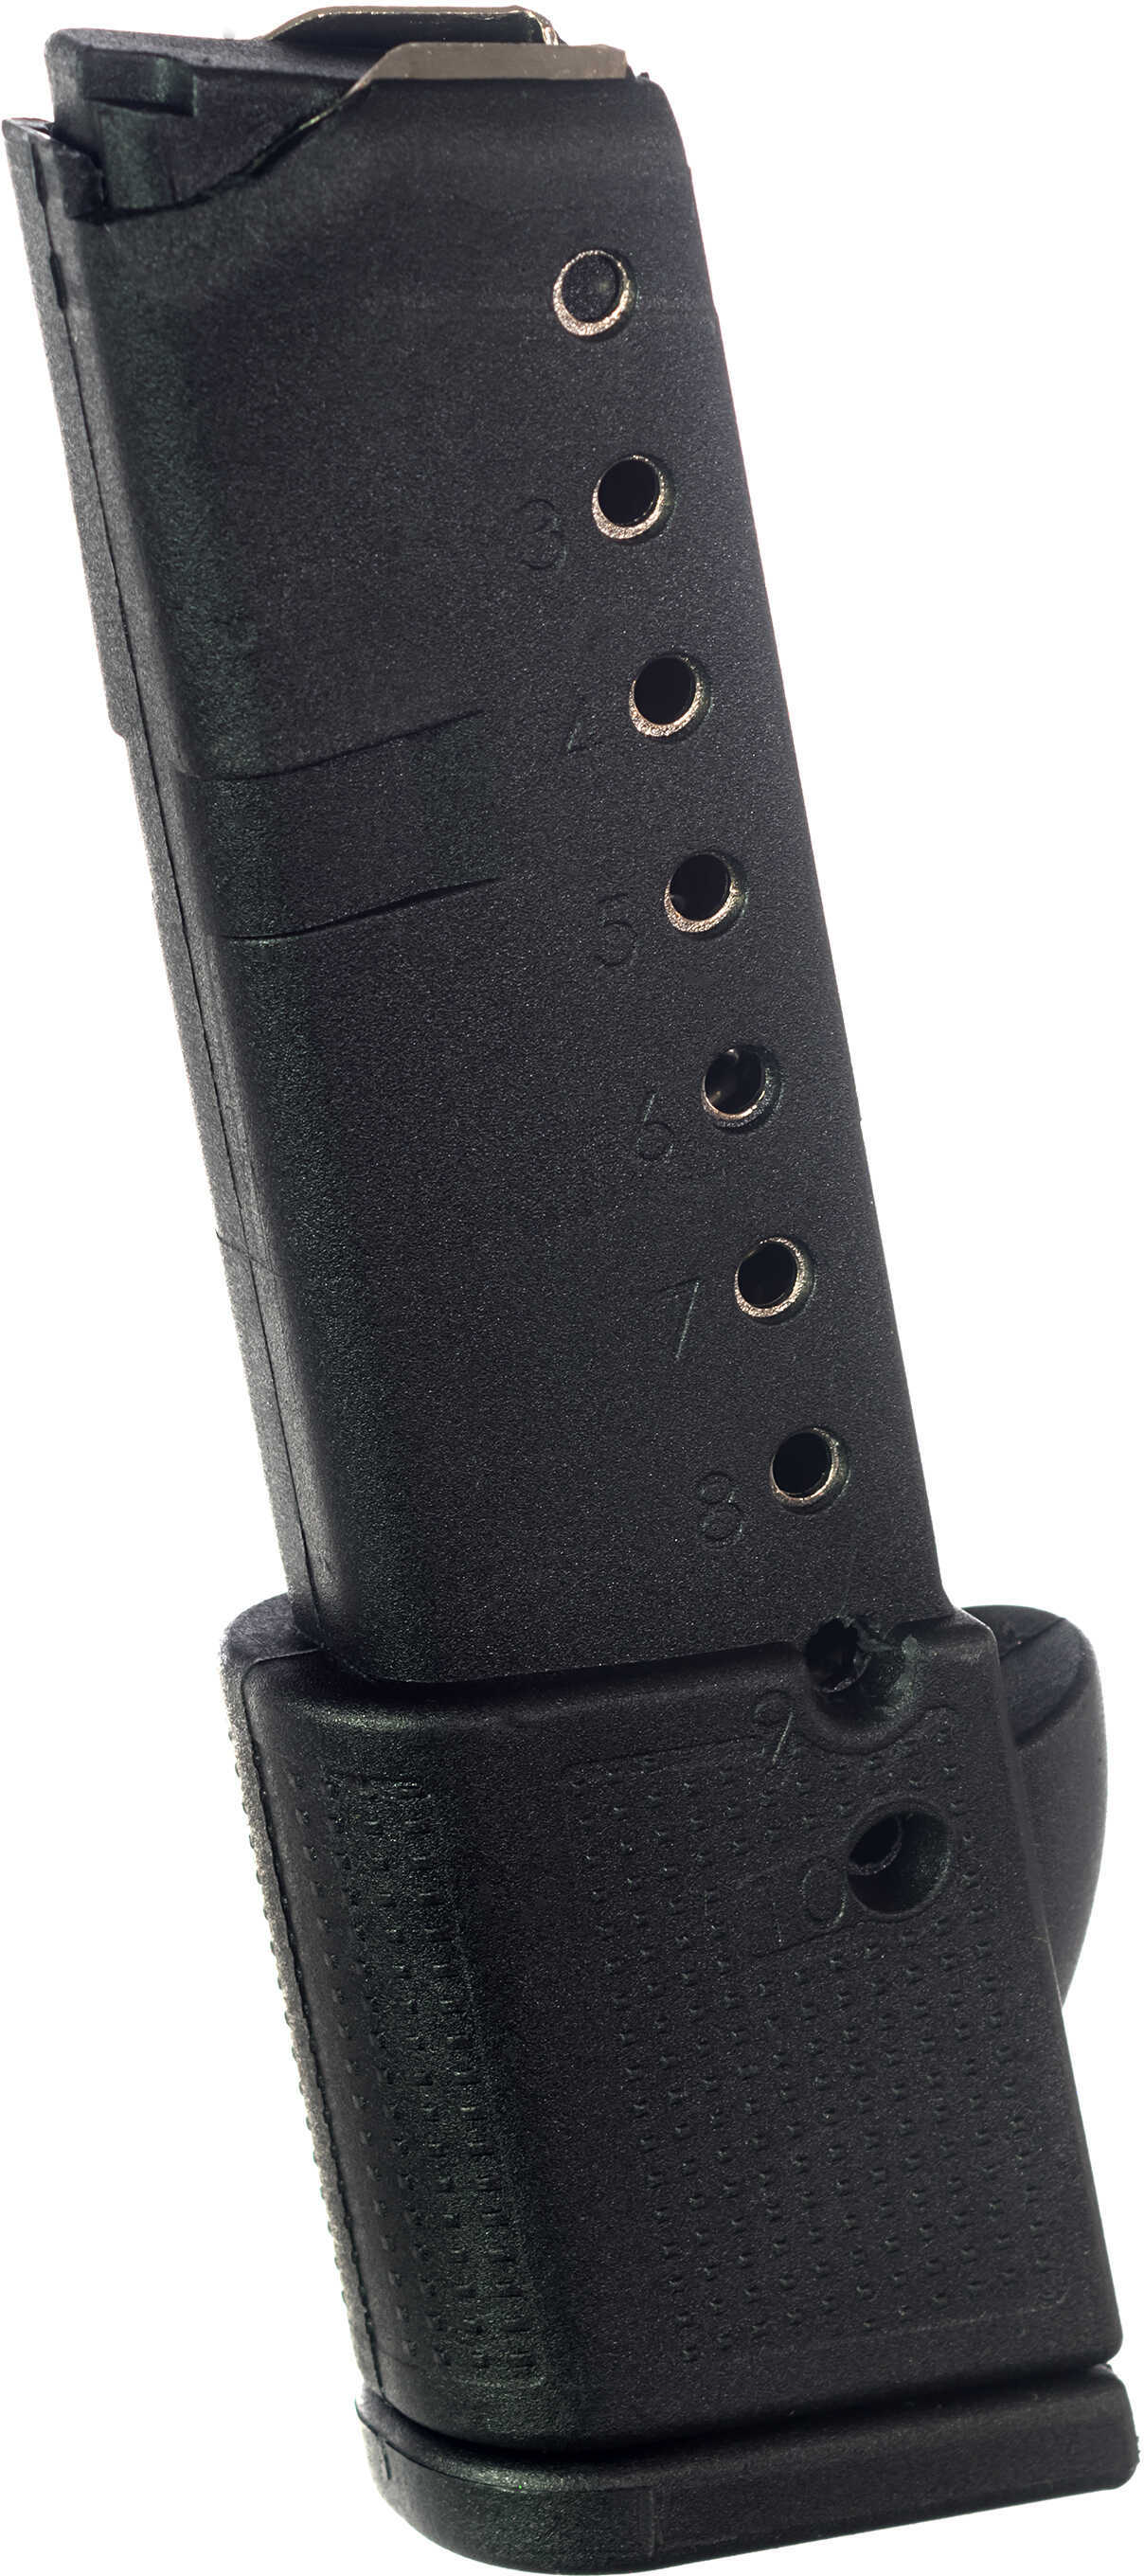 Promag Steel Handgun Magazine Glock 42 .380 ACP Black Polymer 10/Rd